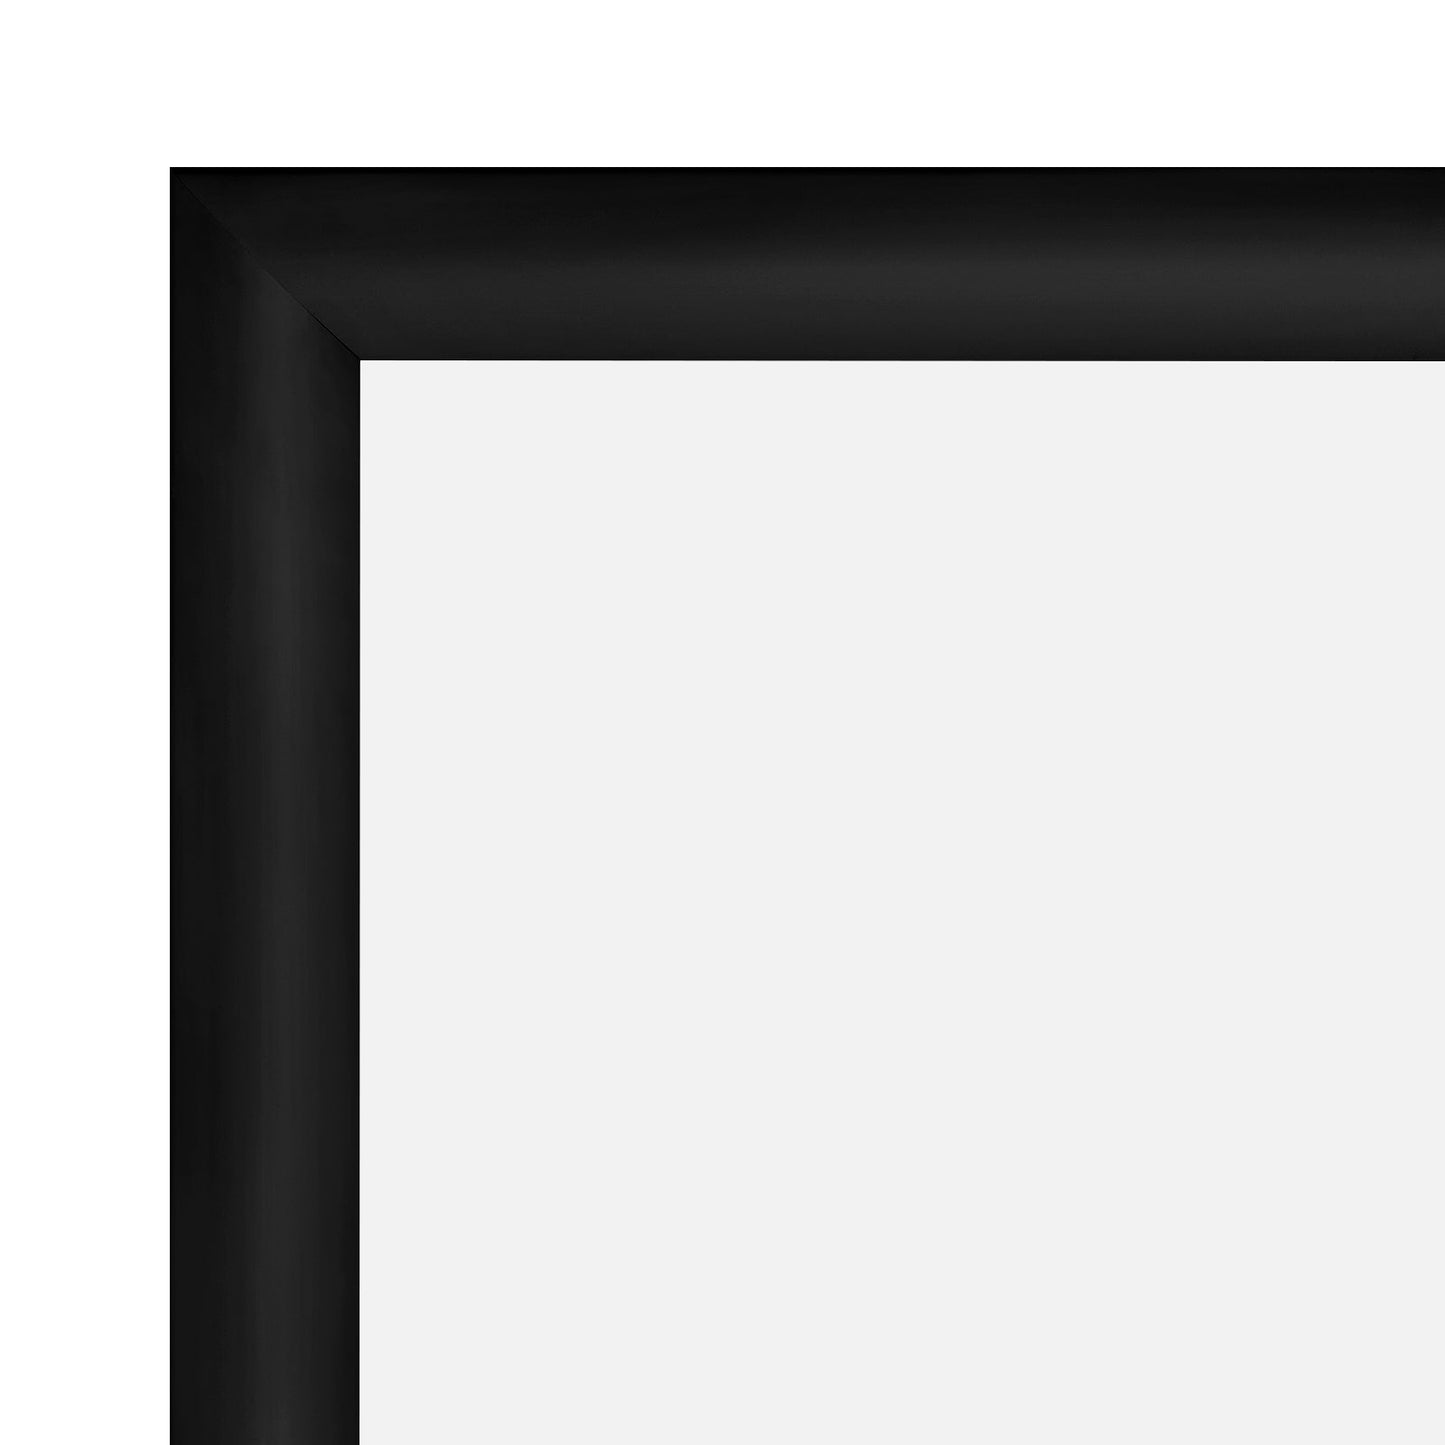 11x17 Black SnapeZo® Snap Frame - 1.2" Profile